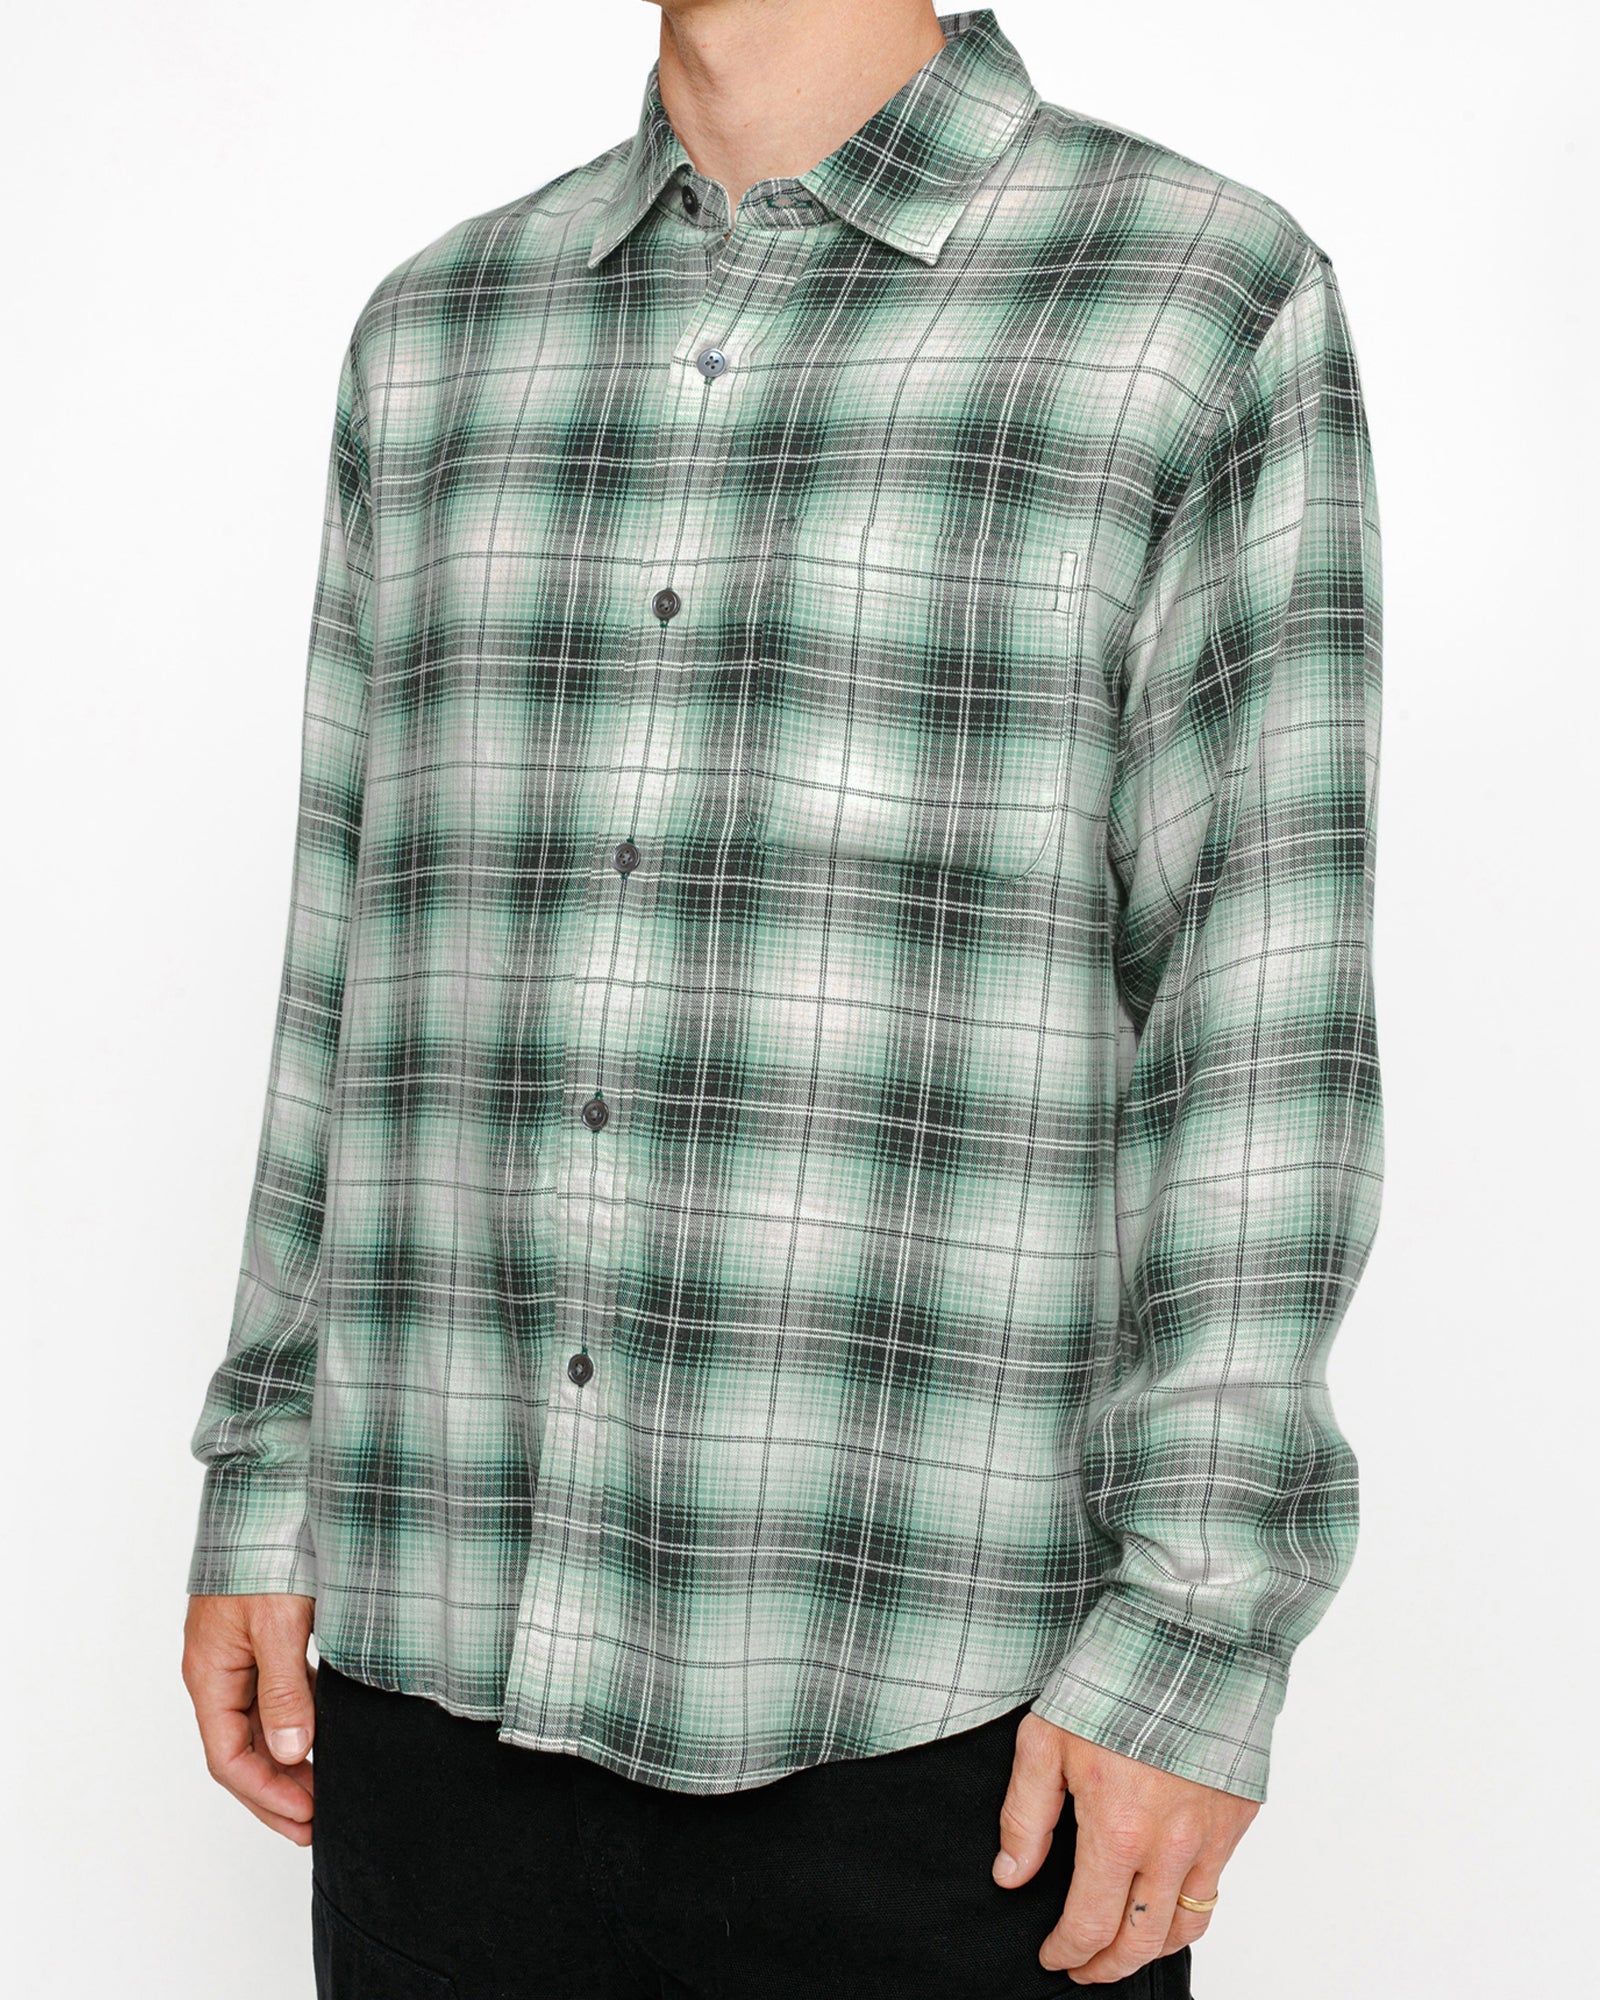 Stüssy Matthew Shirt Lg Printed Plaid Green Tops